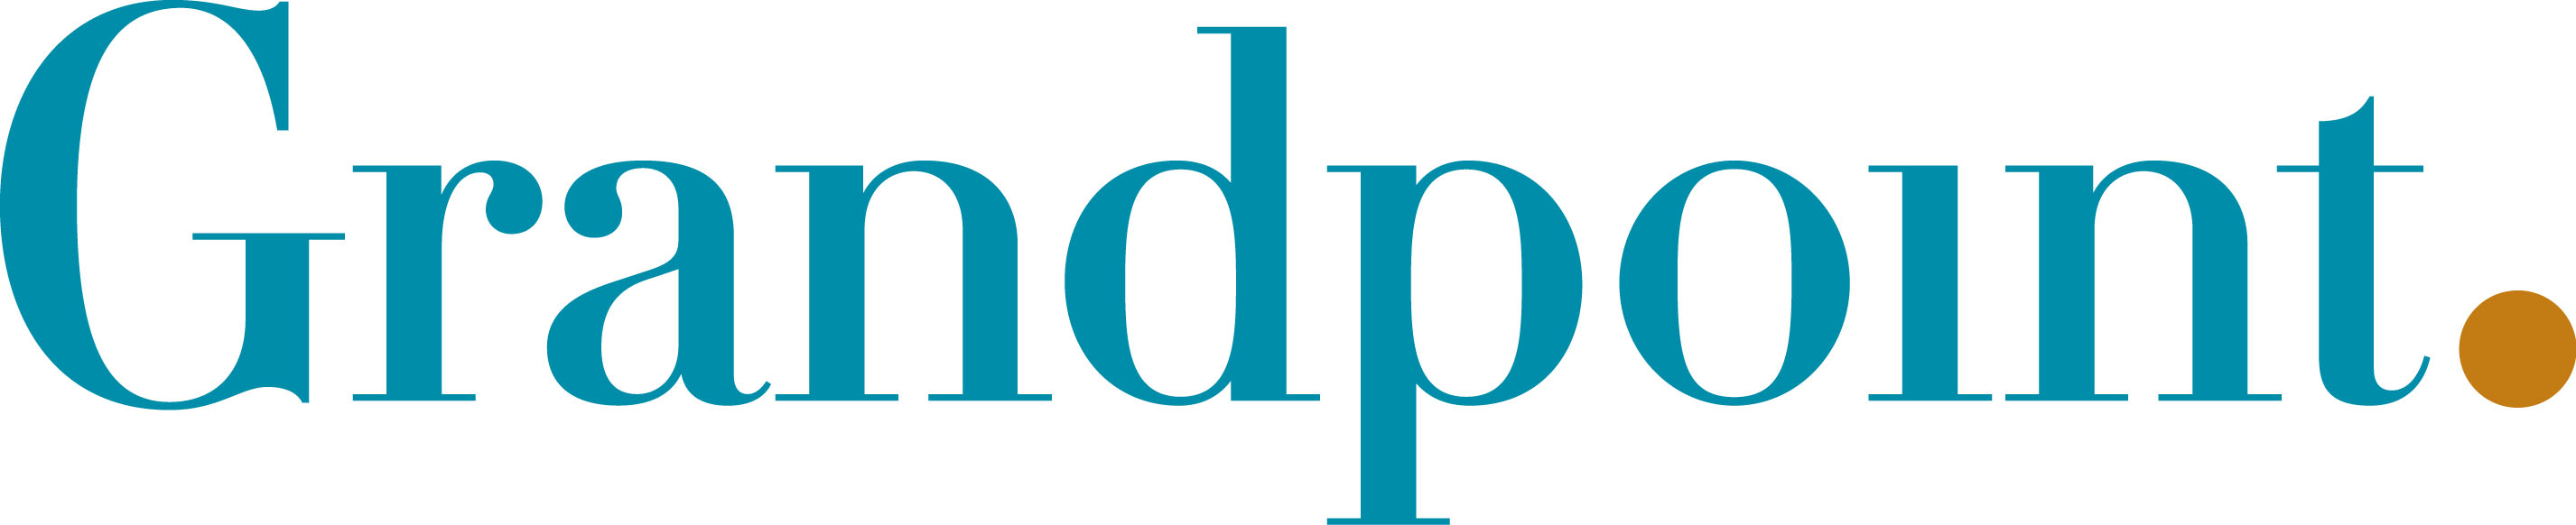 Pacific Premier Bancorp, Inc. Announces Completion of Acquisition of Grandpoint Capital, Inc.